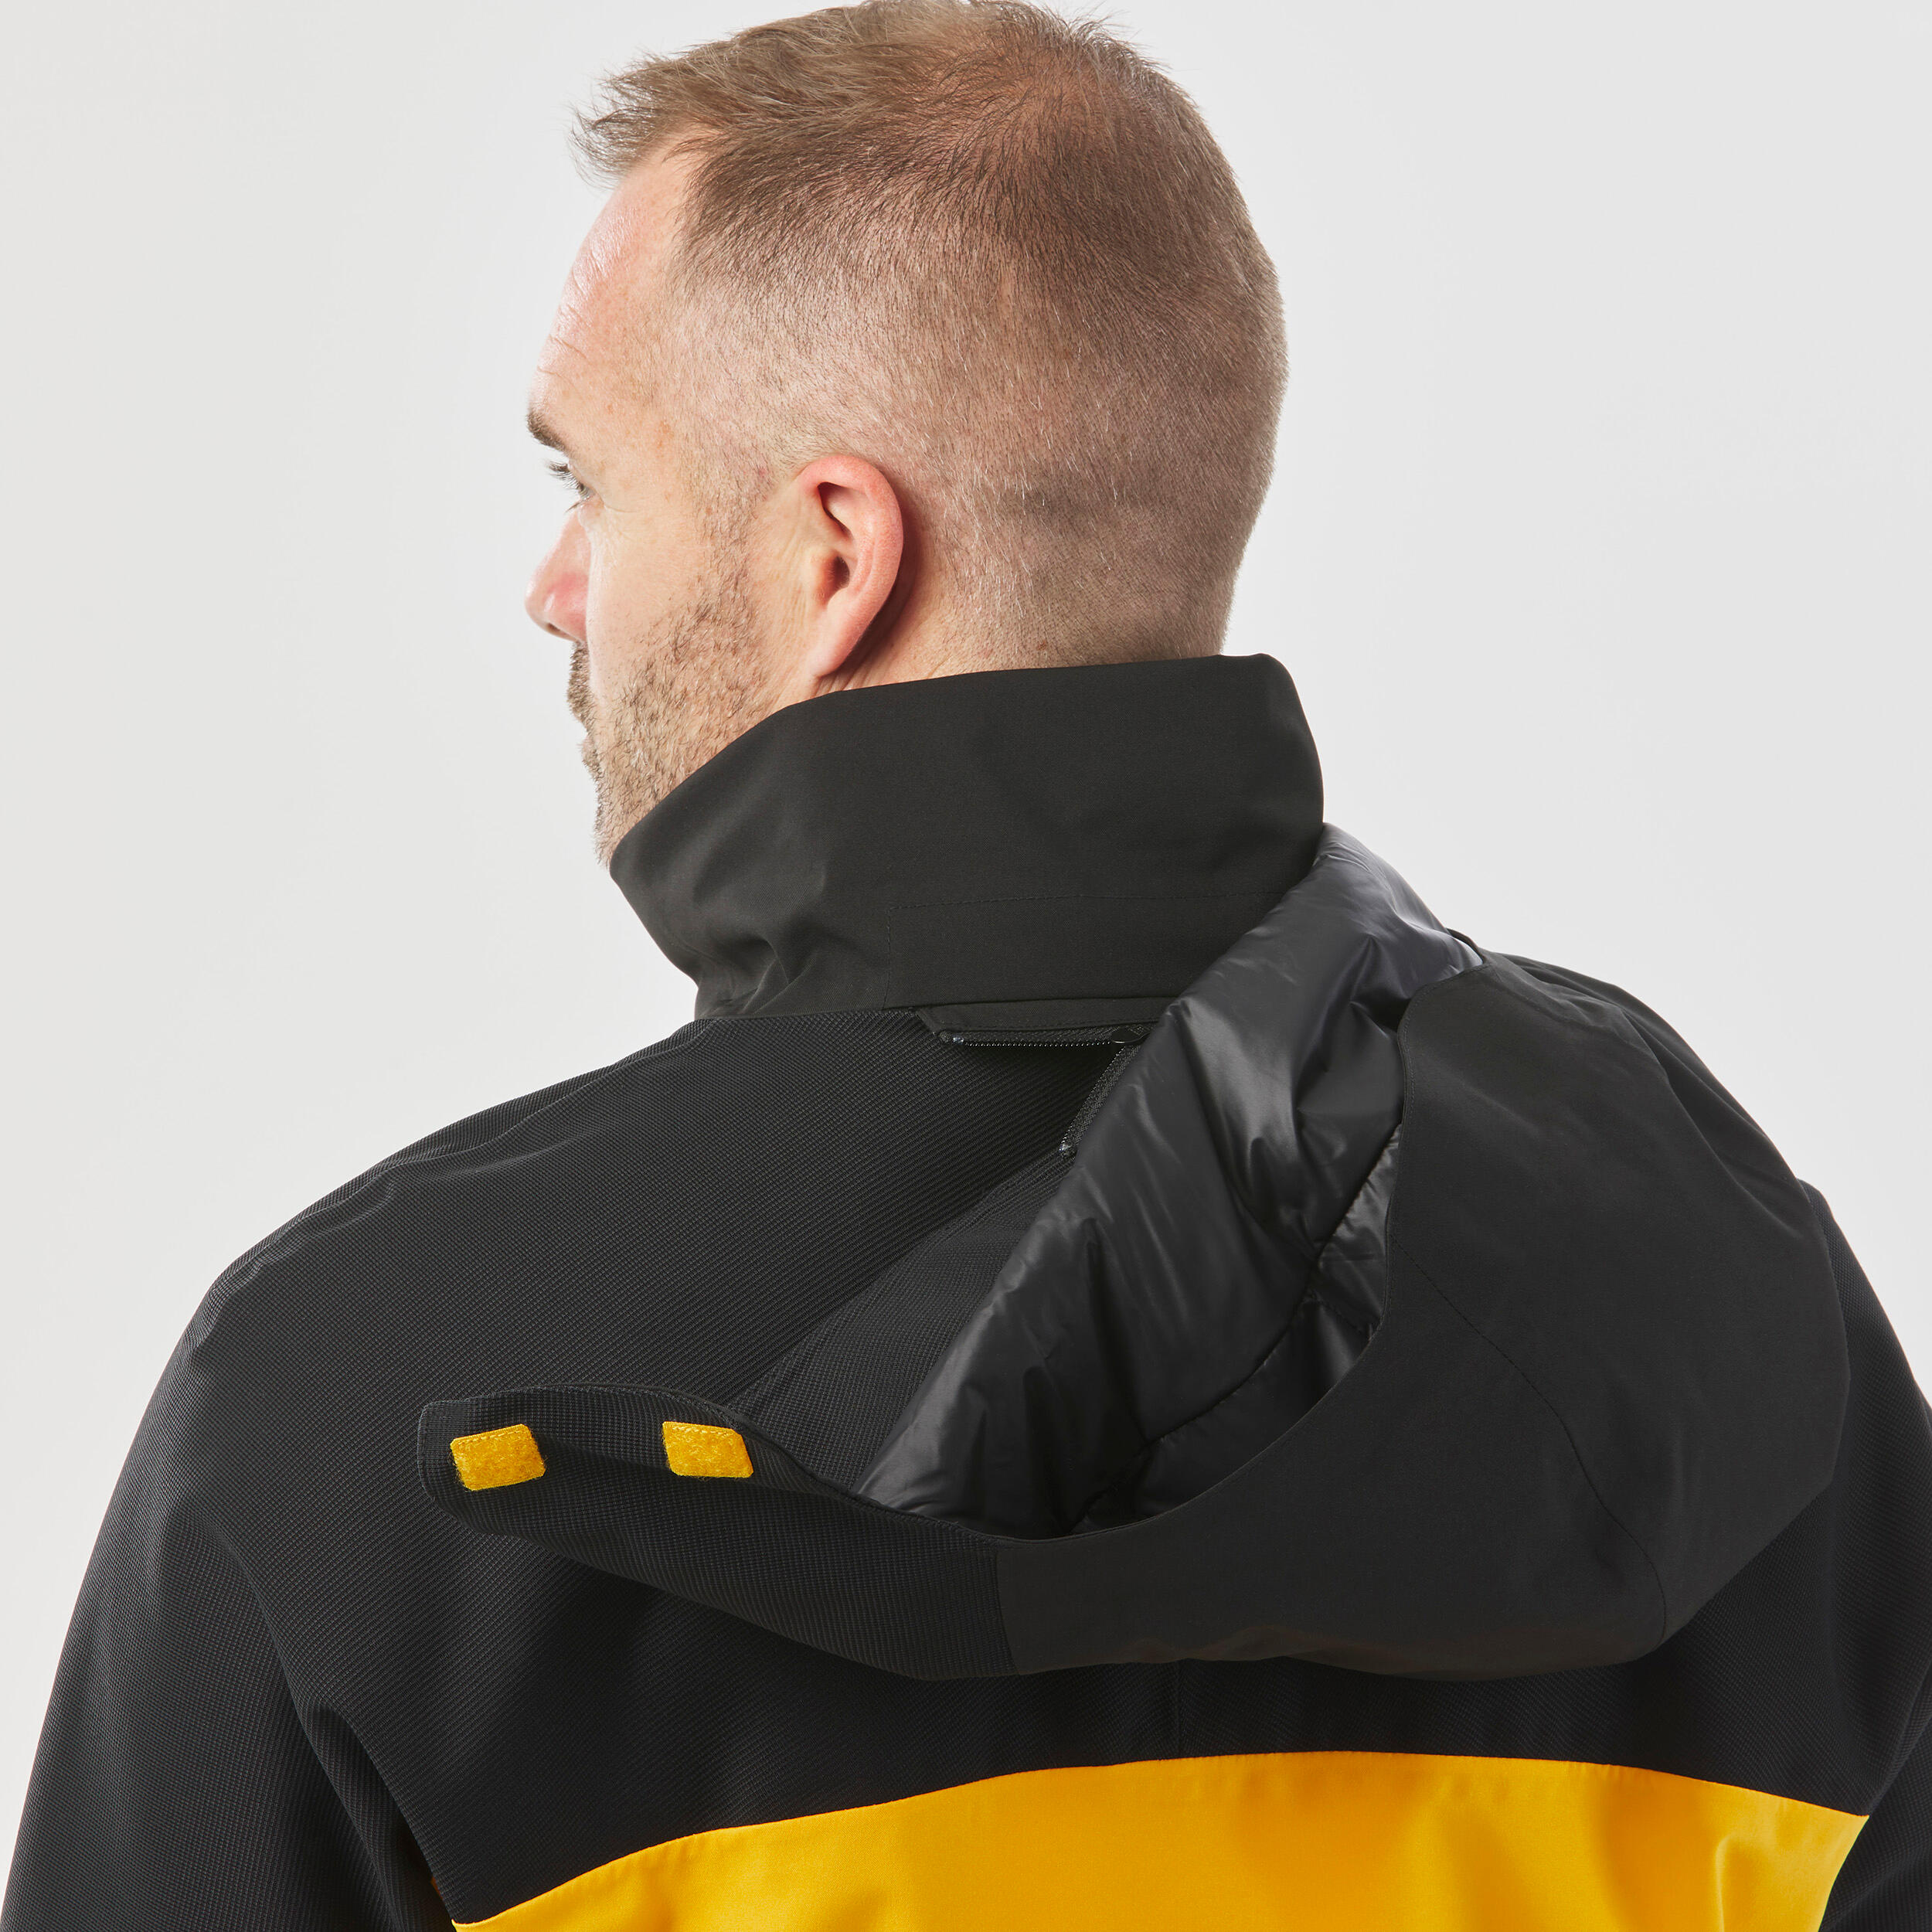 Men’s Ski Jacket 500 sport - Yellow/Black 15/15